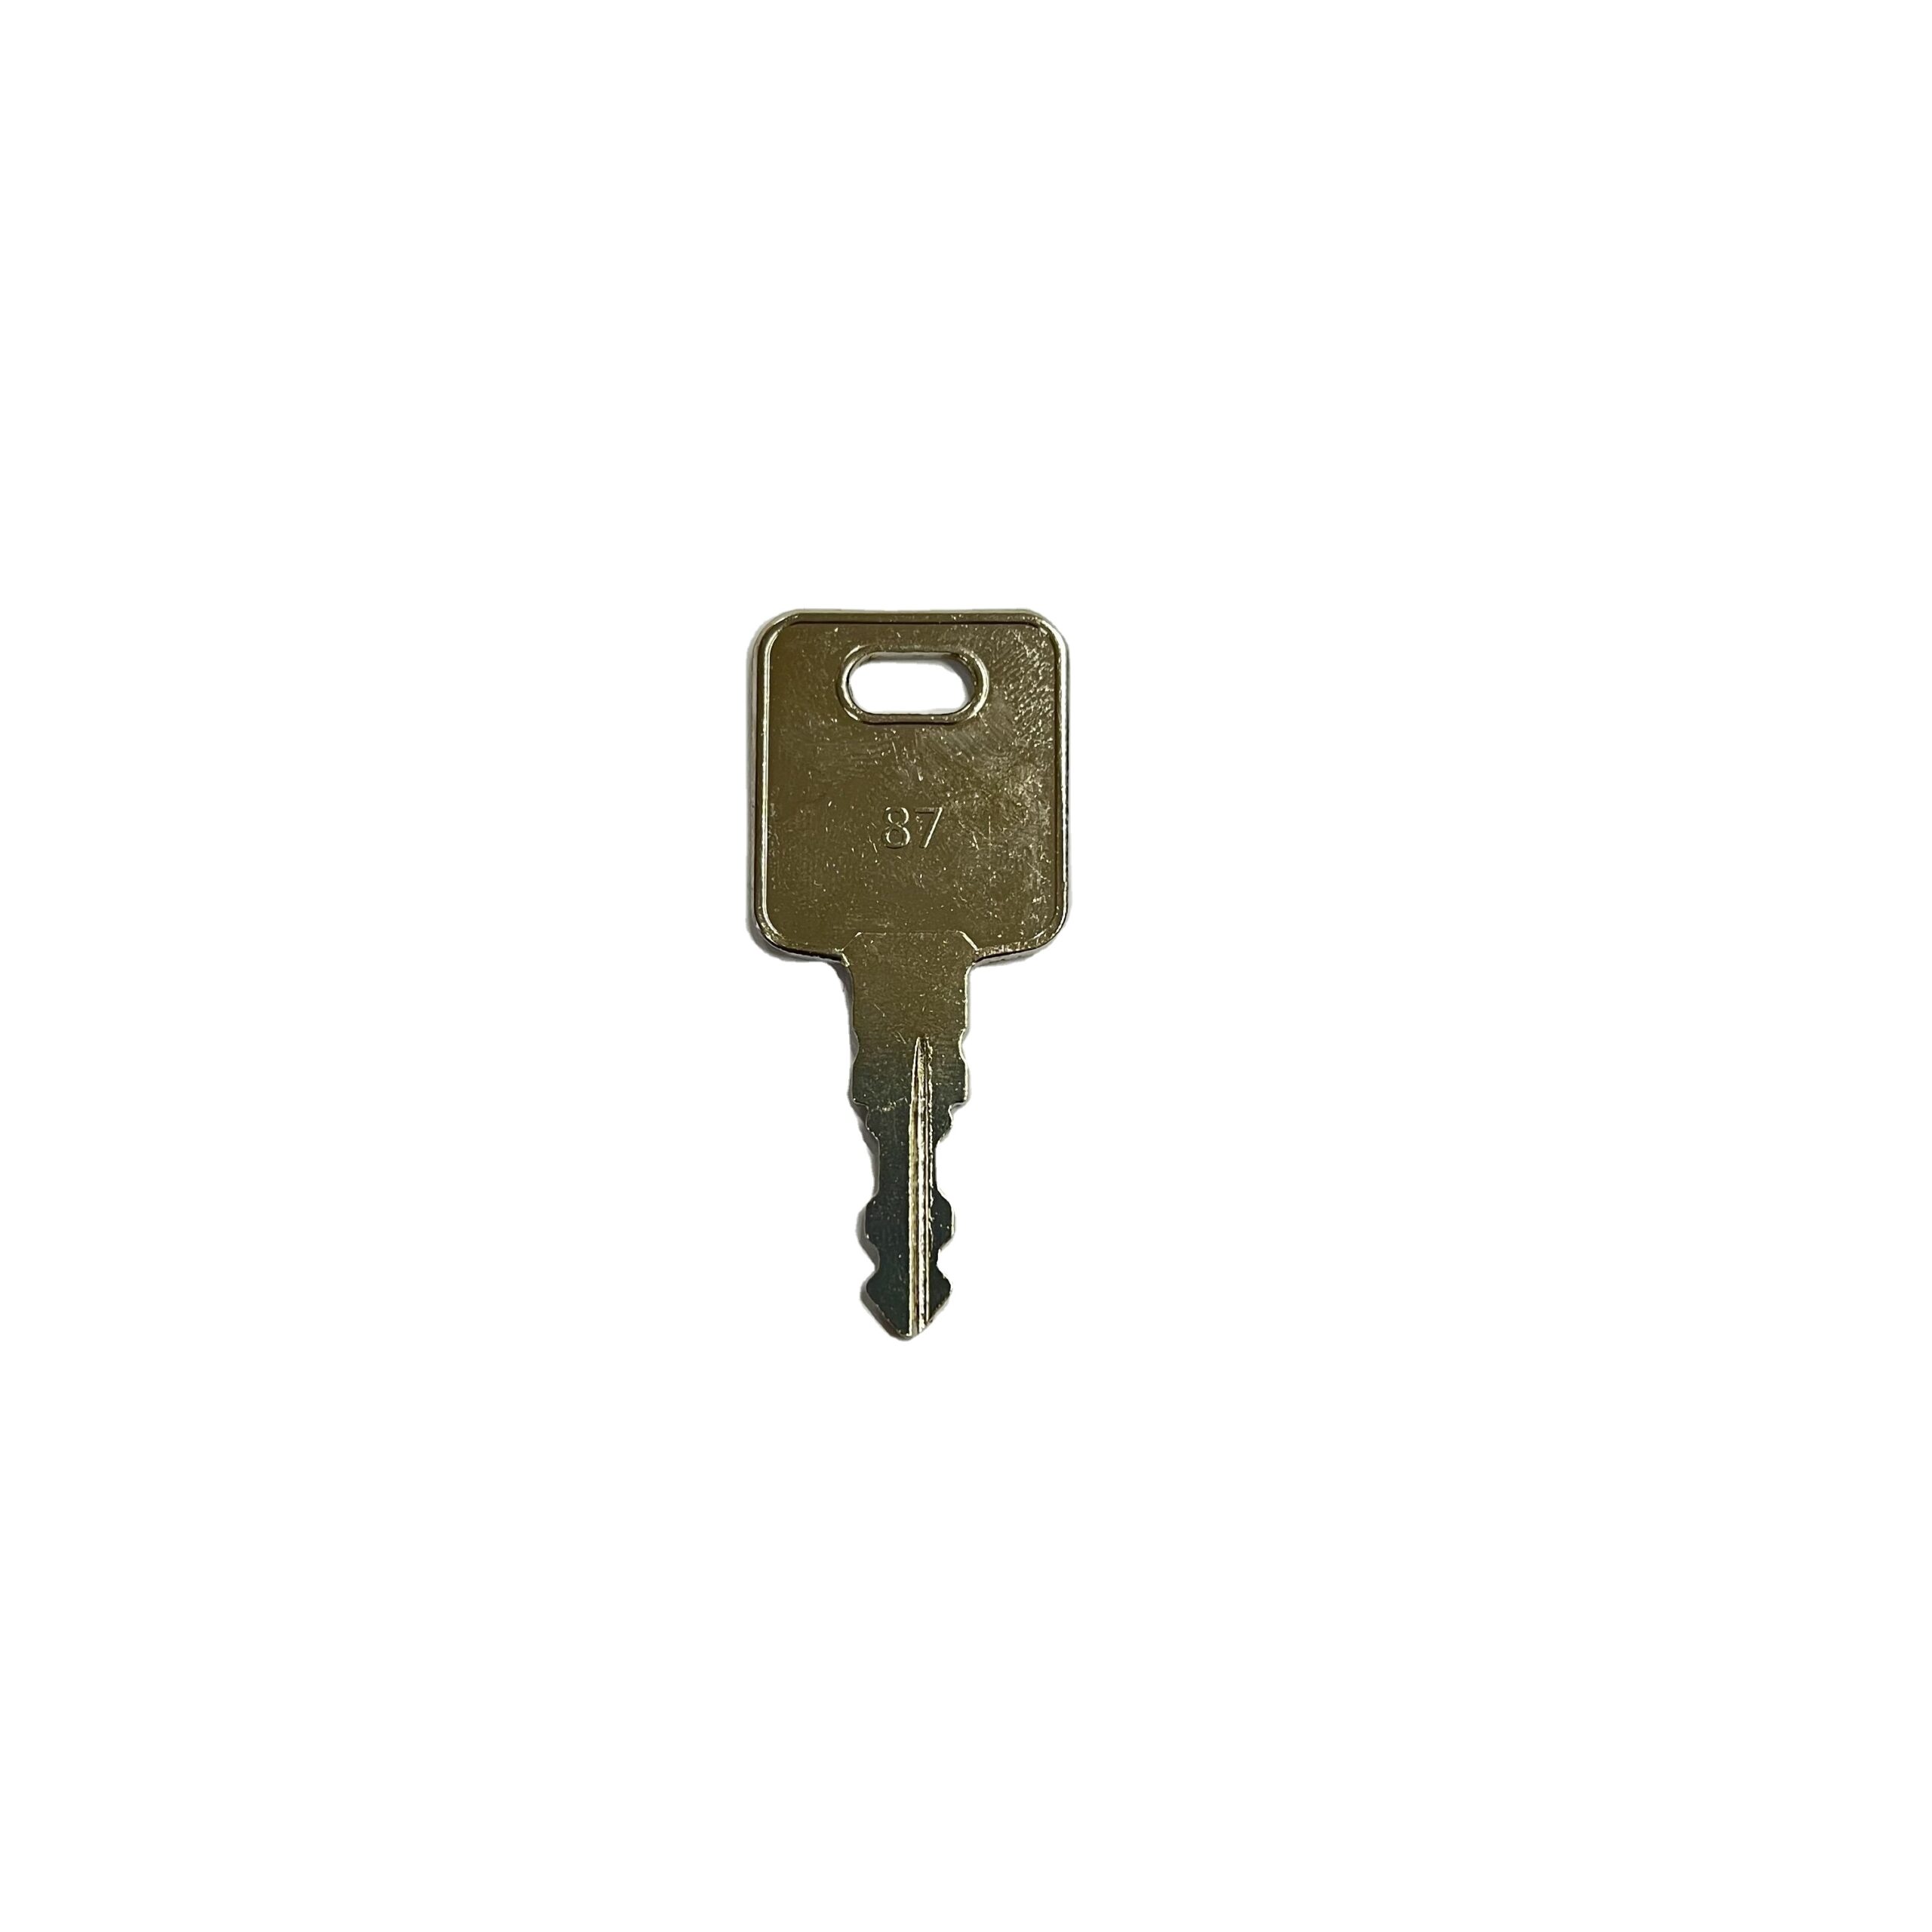 ANNHOO999 2pc Key RV MK9901 for FIC Code 9901 M 6601 Rv-Motorhome-Master Green Key 